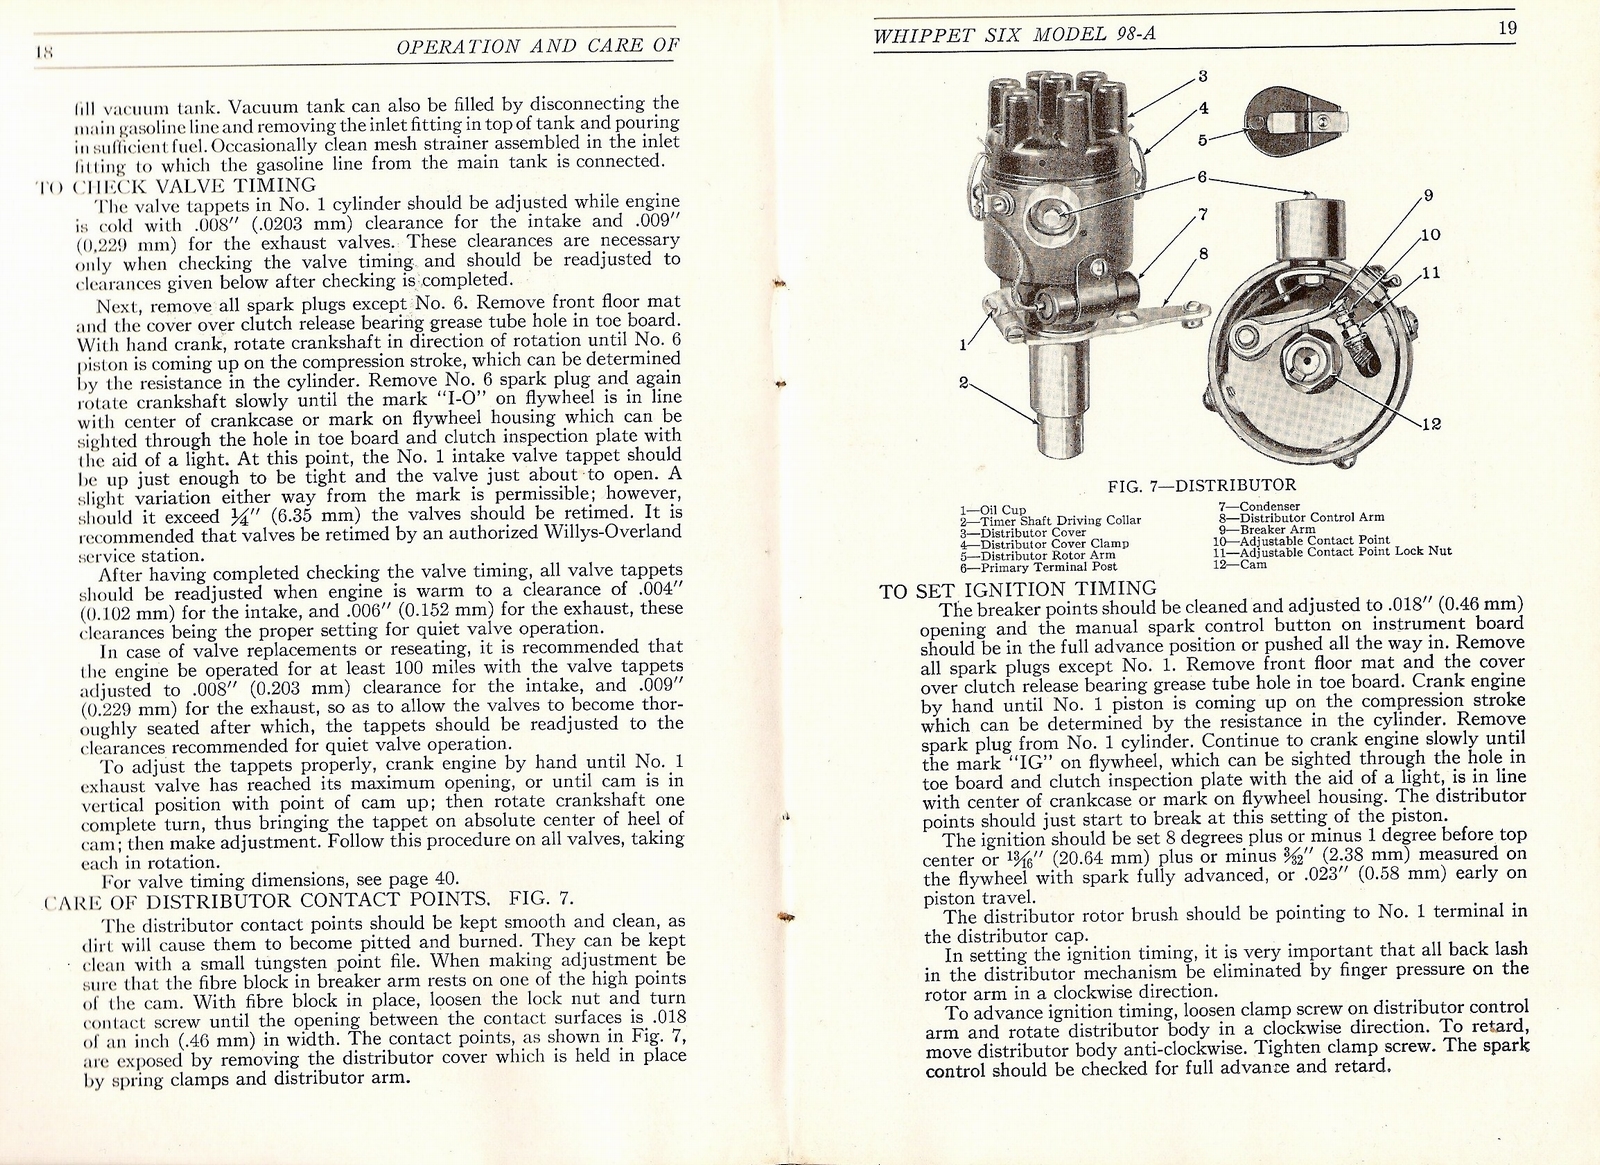 n_1929 Whippet Six Operation Manual-18-19.jpg